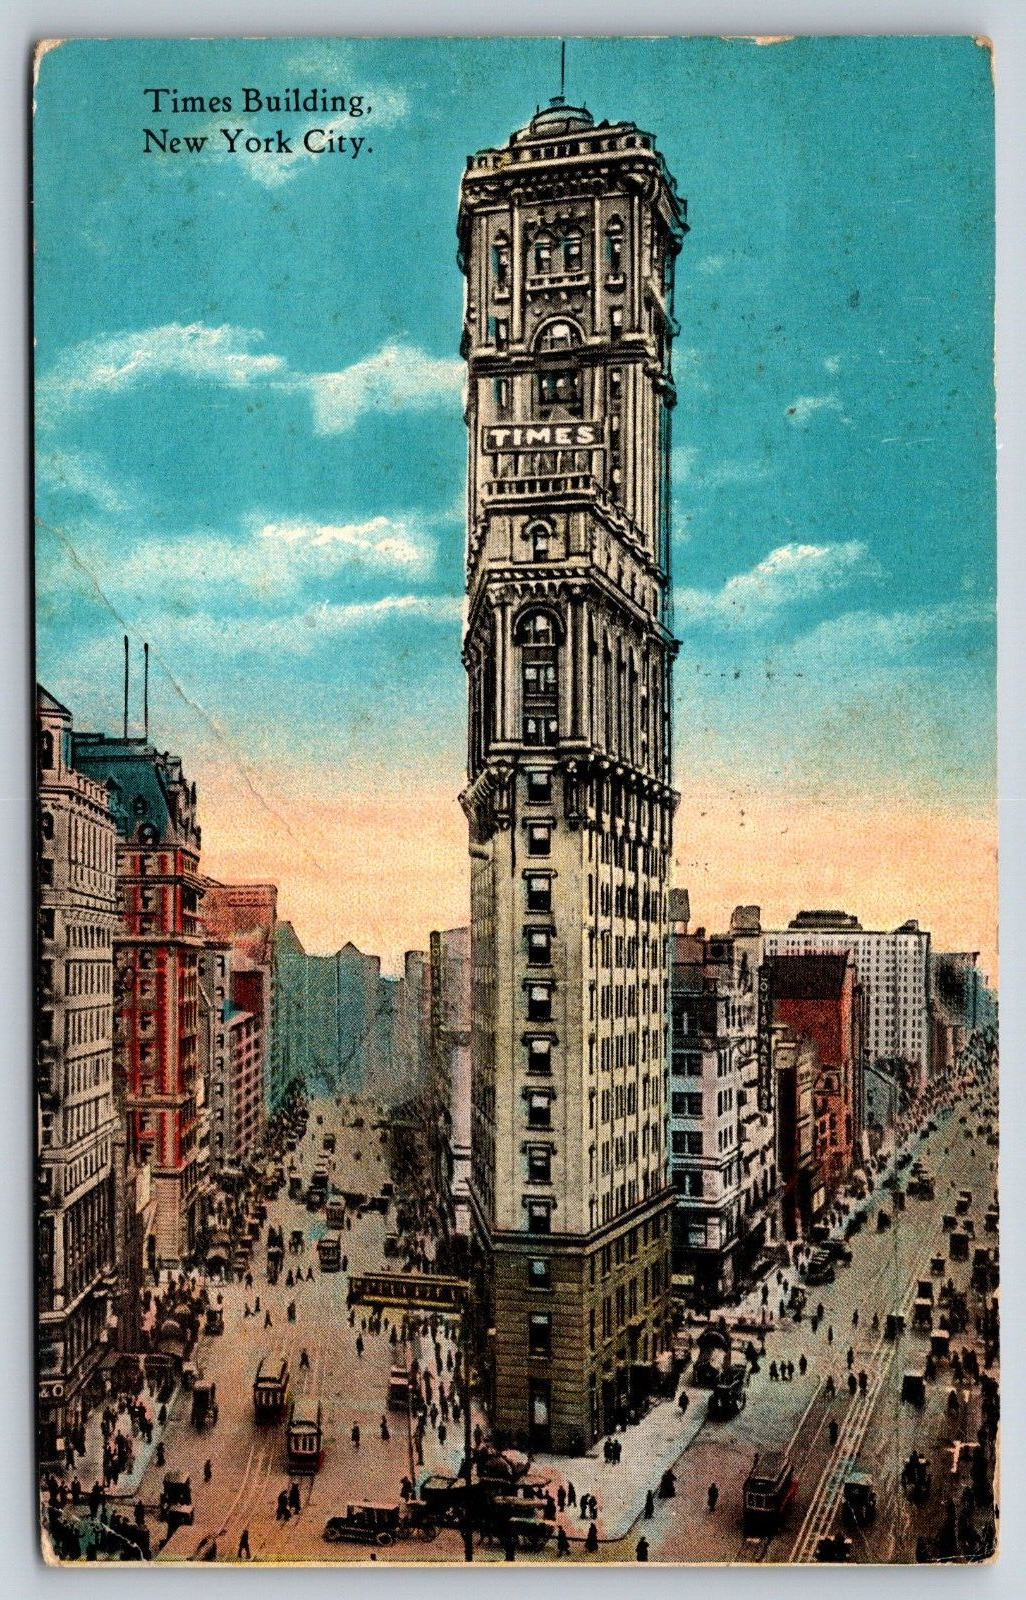 Times Building, New York City, NY Vintage Postcard